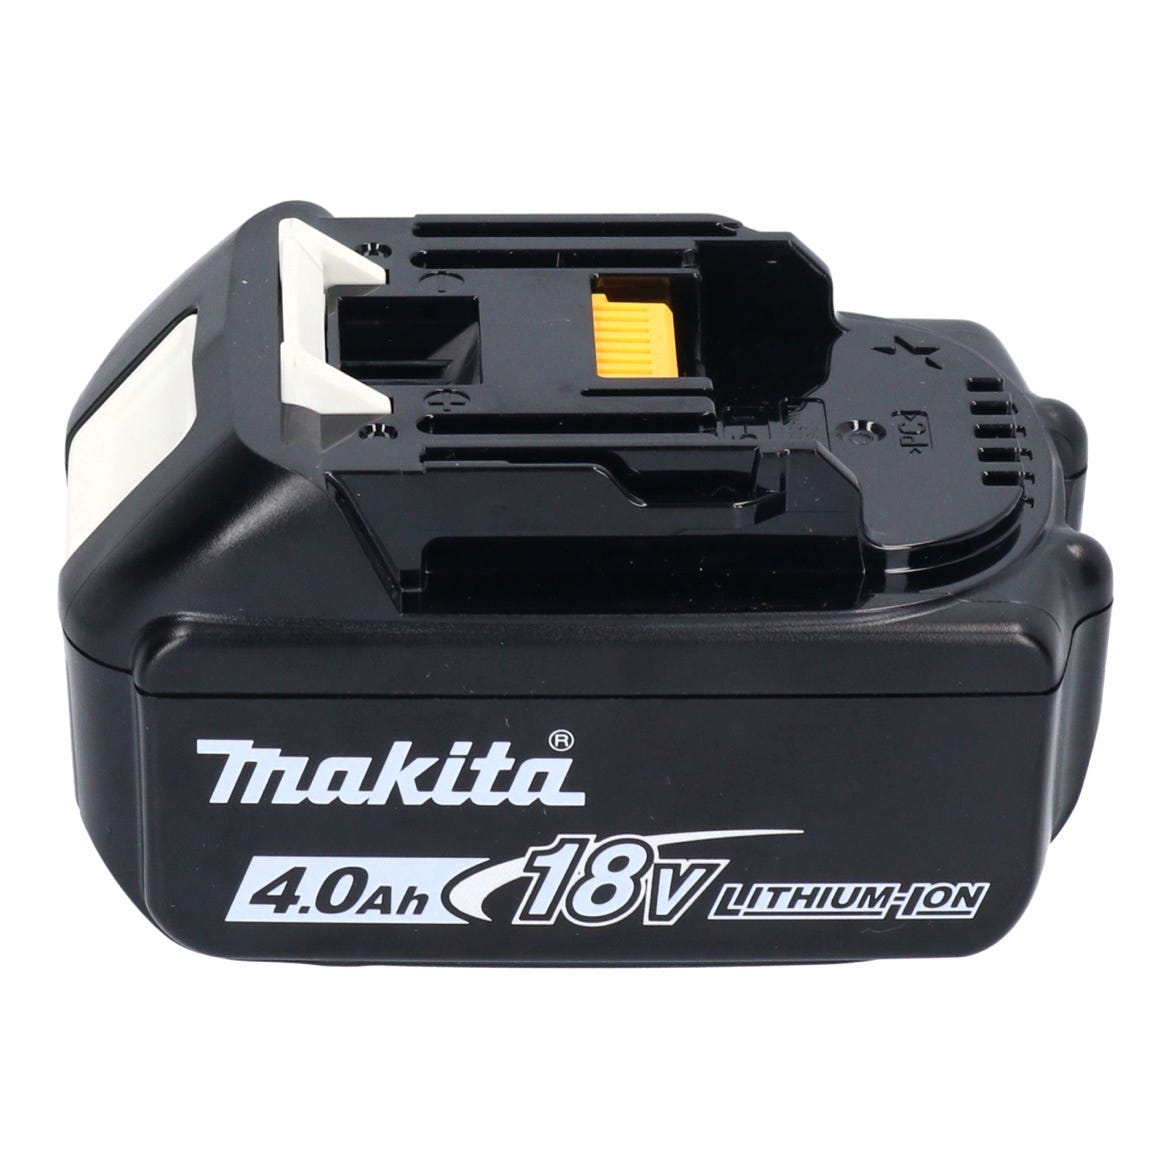 Makita DJV185M1 Scie sauteuse sans fil 18V Brushless + 1x Batterie 4,0Ah - sans chargeur 2